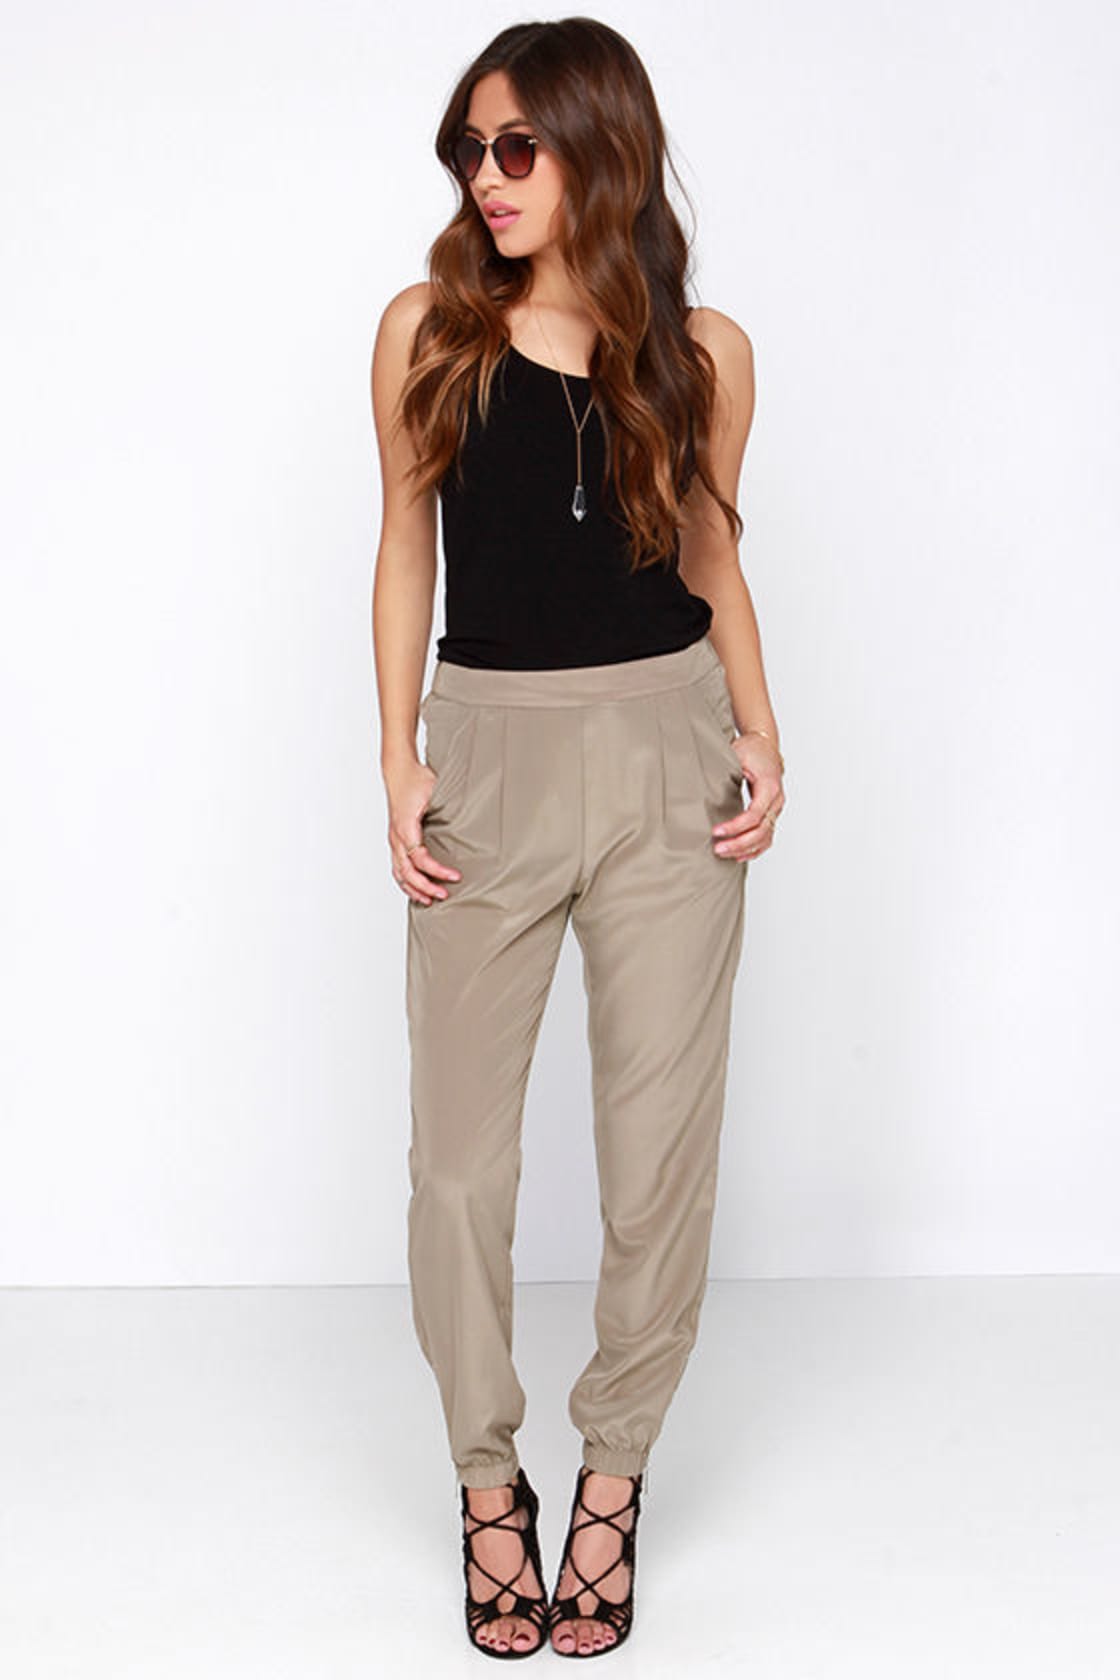 Cute Taupe Pants - Jogger Pants - Zipper Pants - $49.00 - Lulus